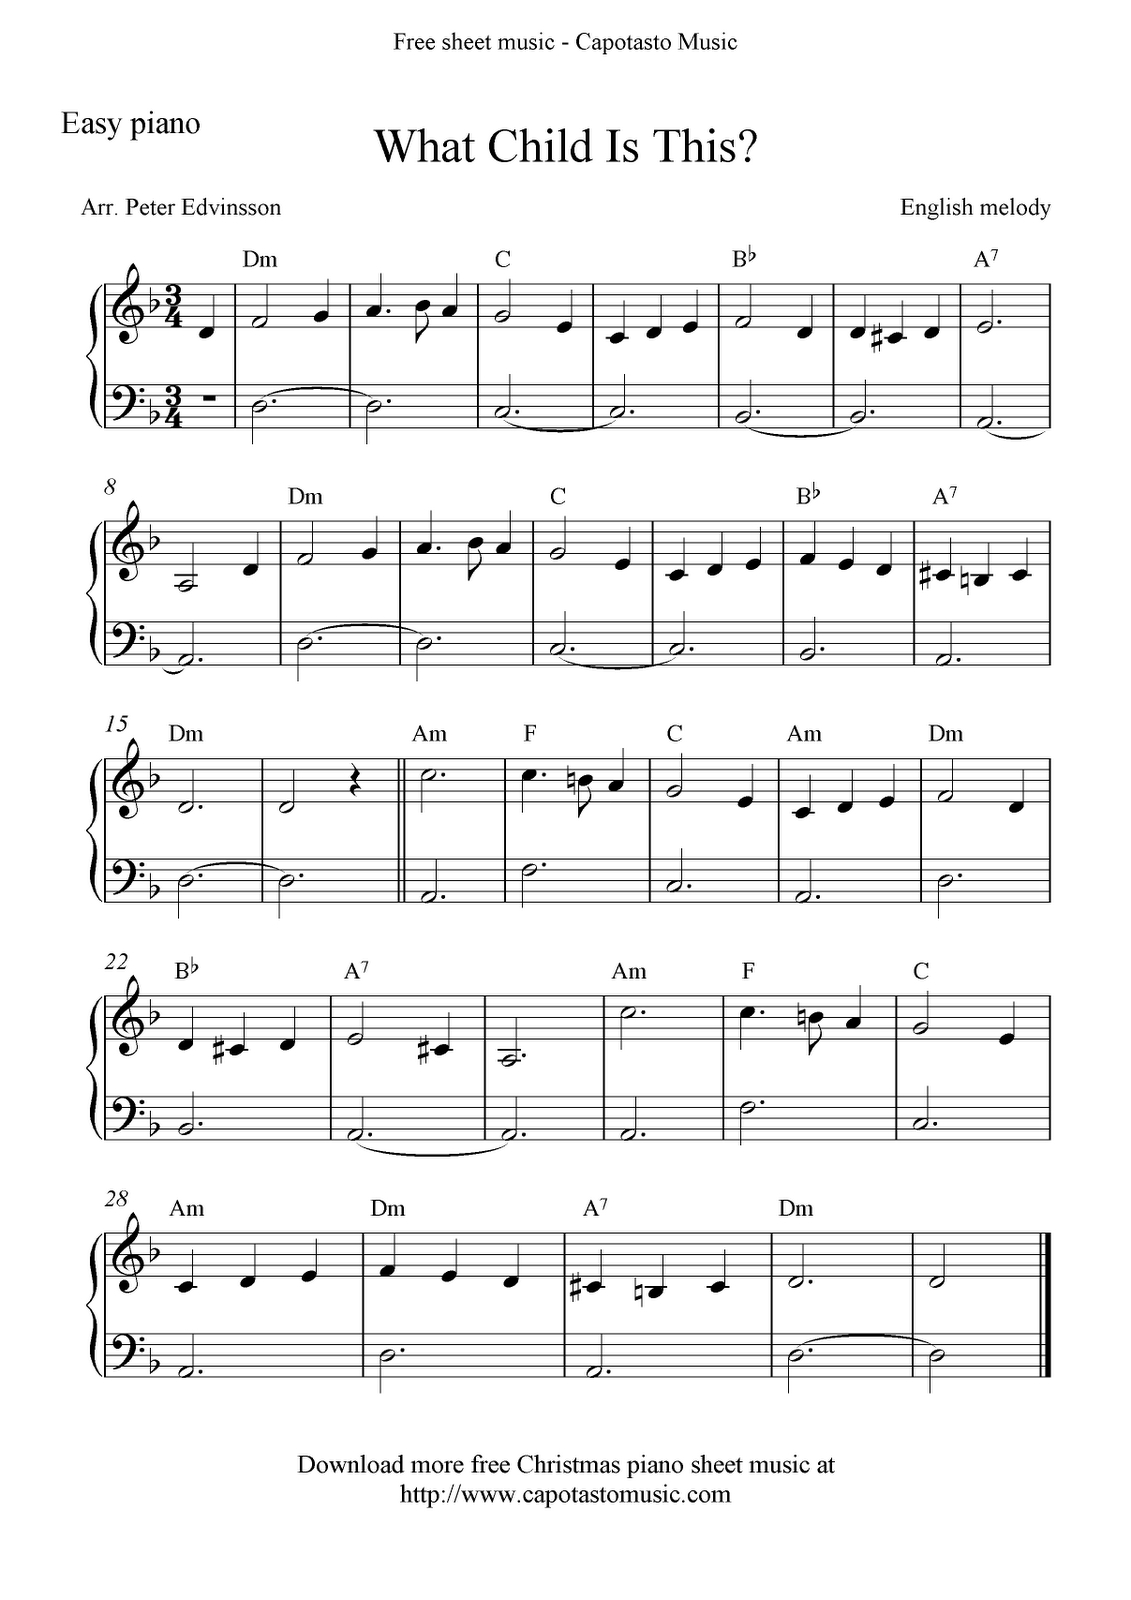 Free Christmas Piano Sheet Music For Beginners Printable Free Printable